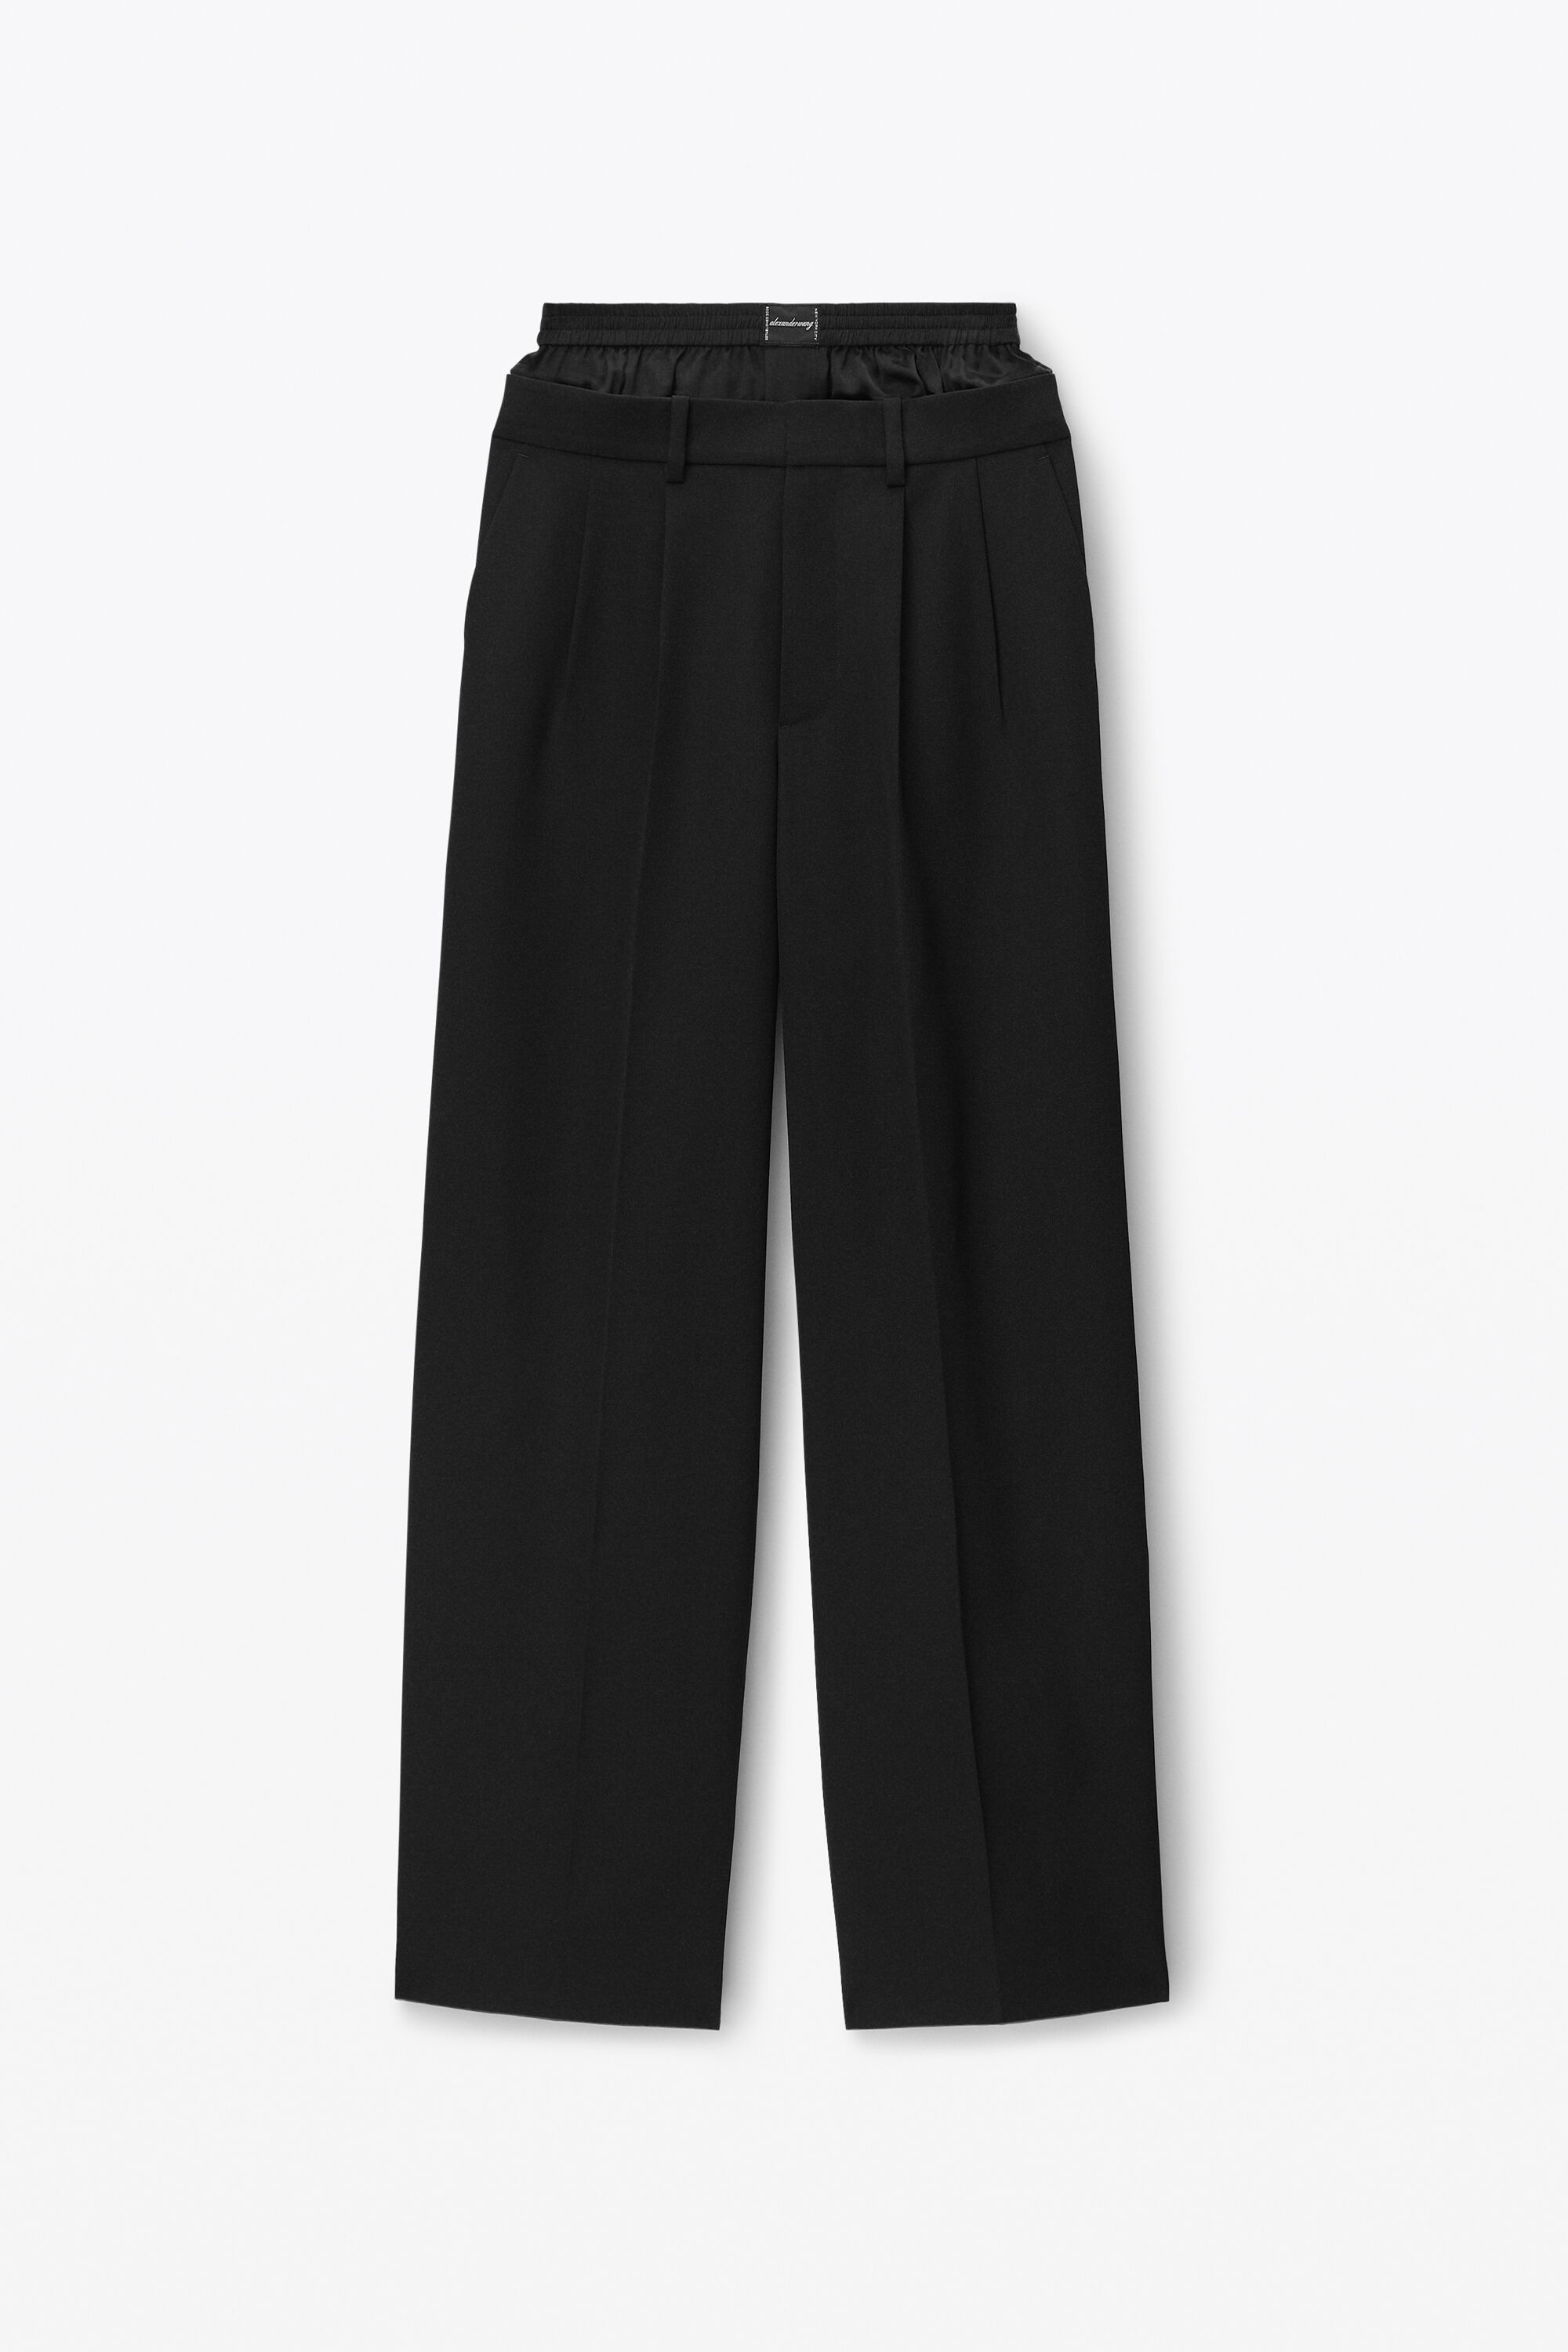 Alexander Wang Black Wool Tailored Zip Front Ball Chain Pants – The Closet  New York